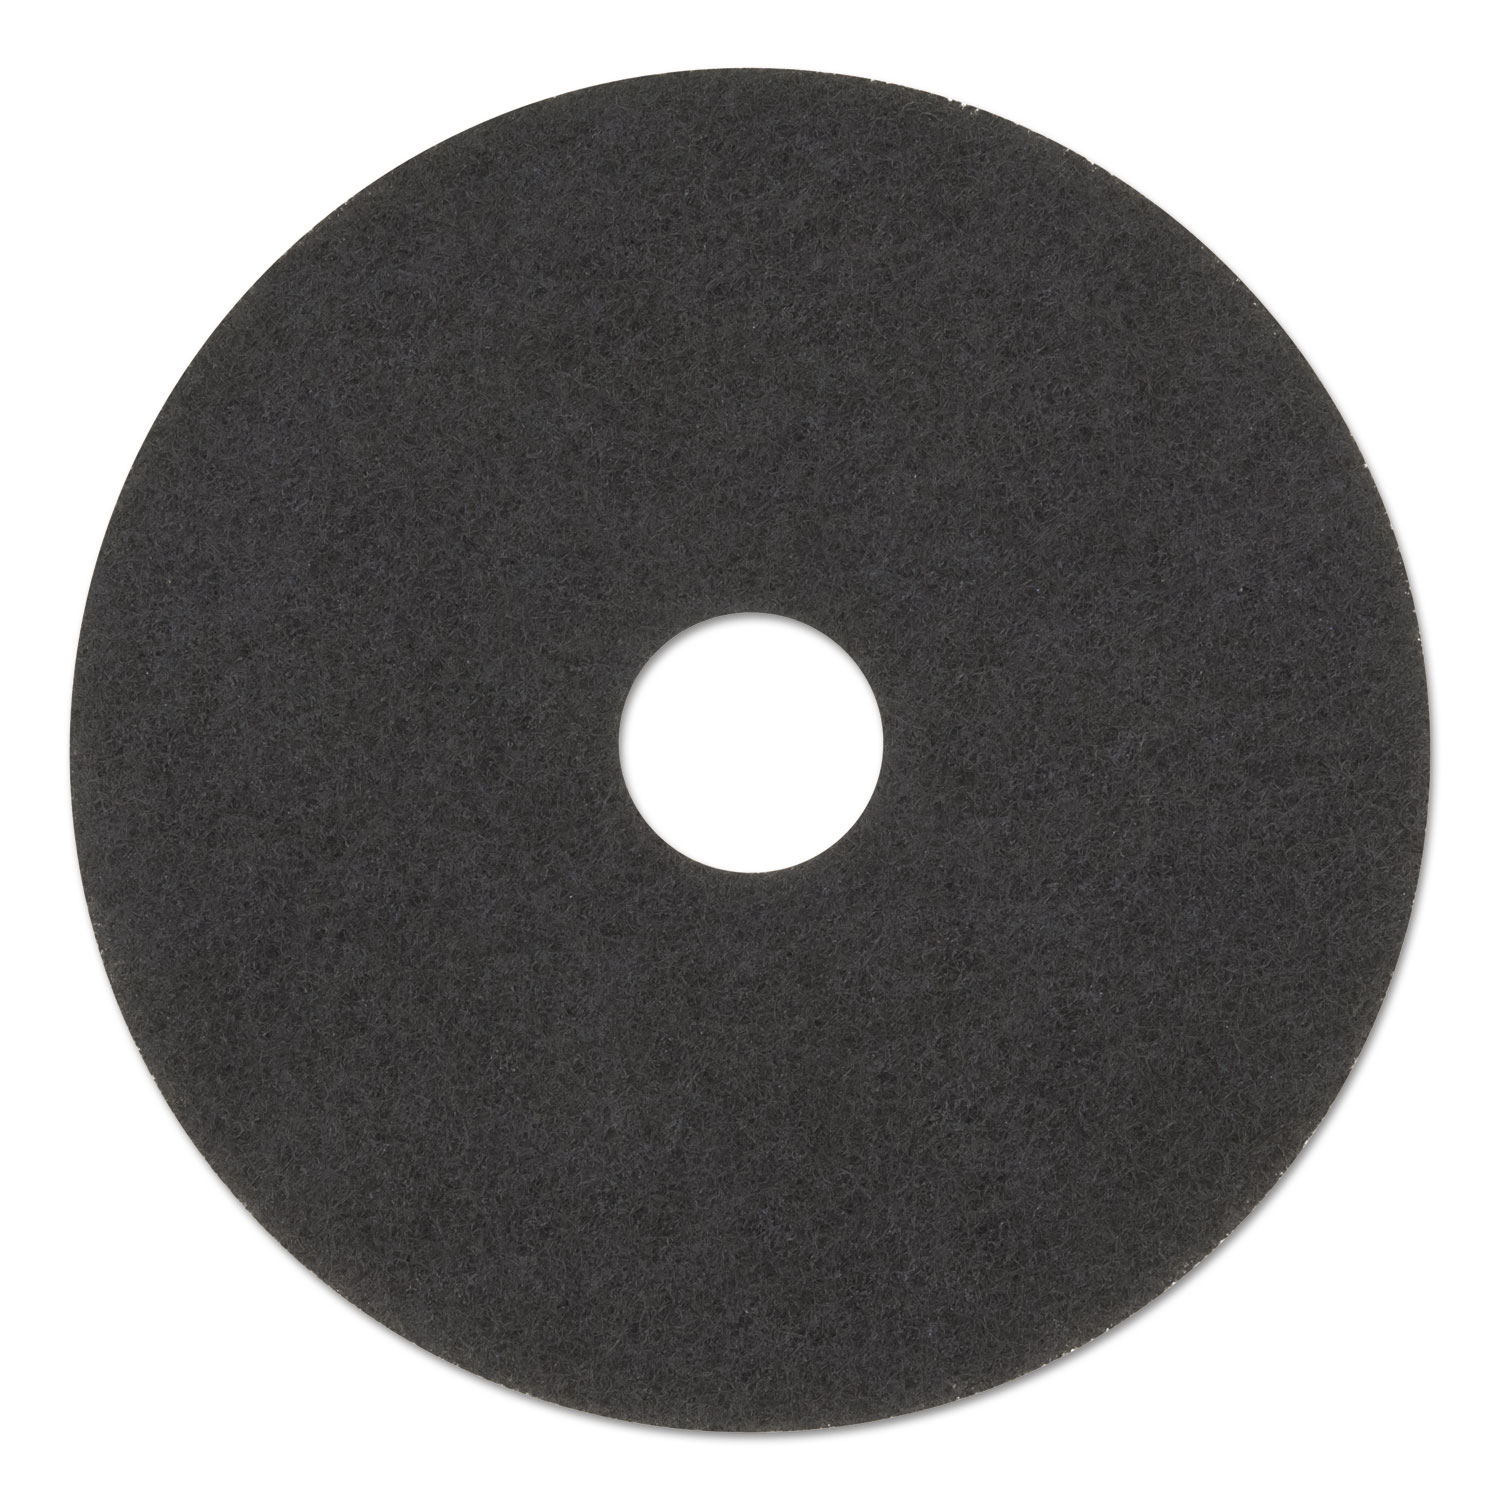  3M 7200 Low-Speed Stripper Floor Pad 7200, 17 Diameter, Black, 5/Carton (MMM08379) 